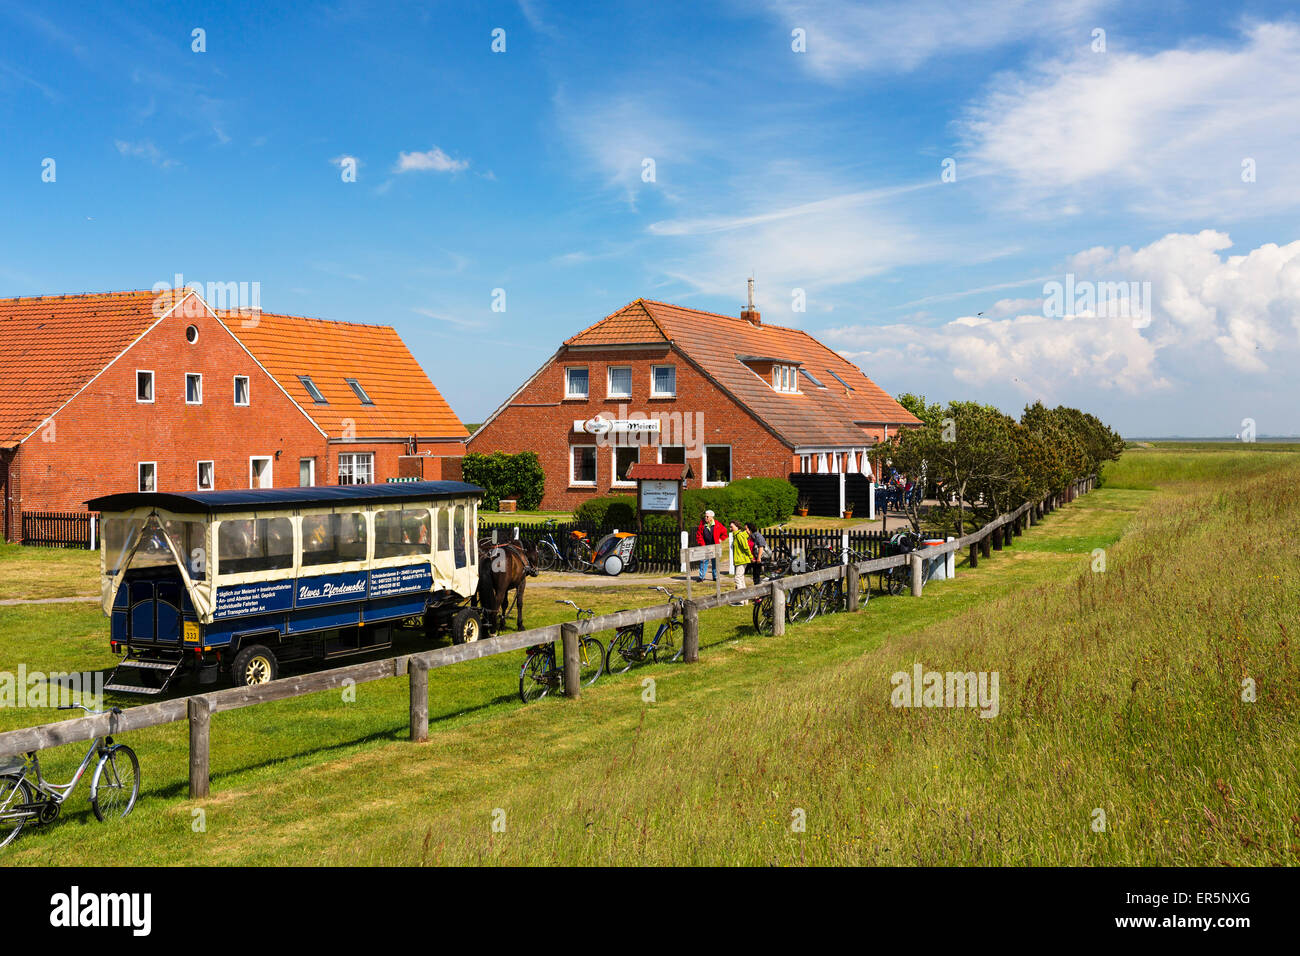 Restaurant Meierei with horse and cart, Langeoog Island, North Sea, East Frisian Islands, East Frisia, Lower Saxony, Germany, Eu Stock Photo